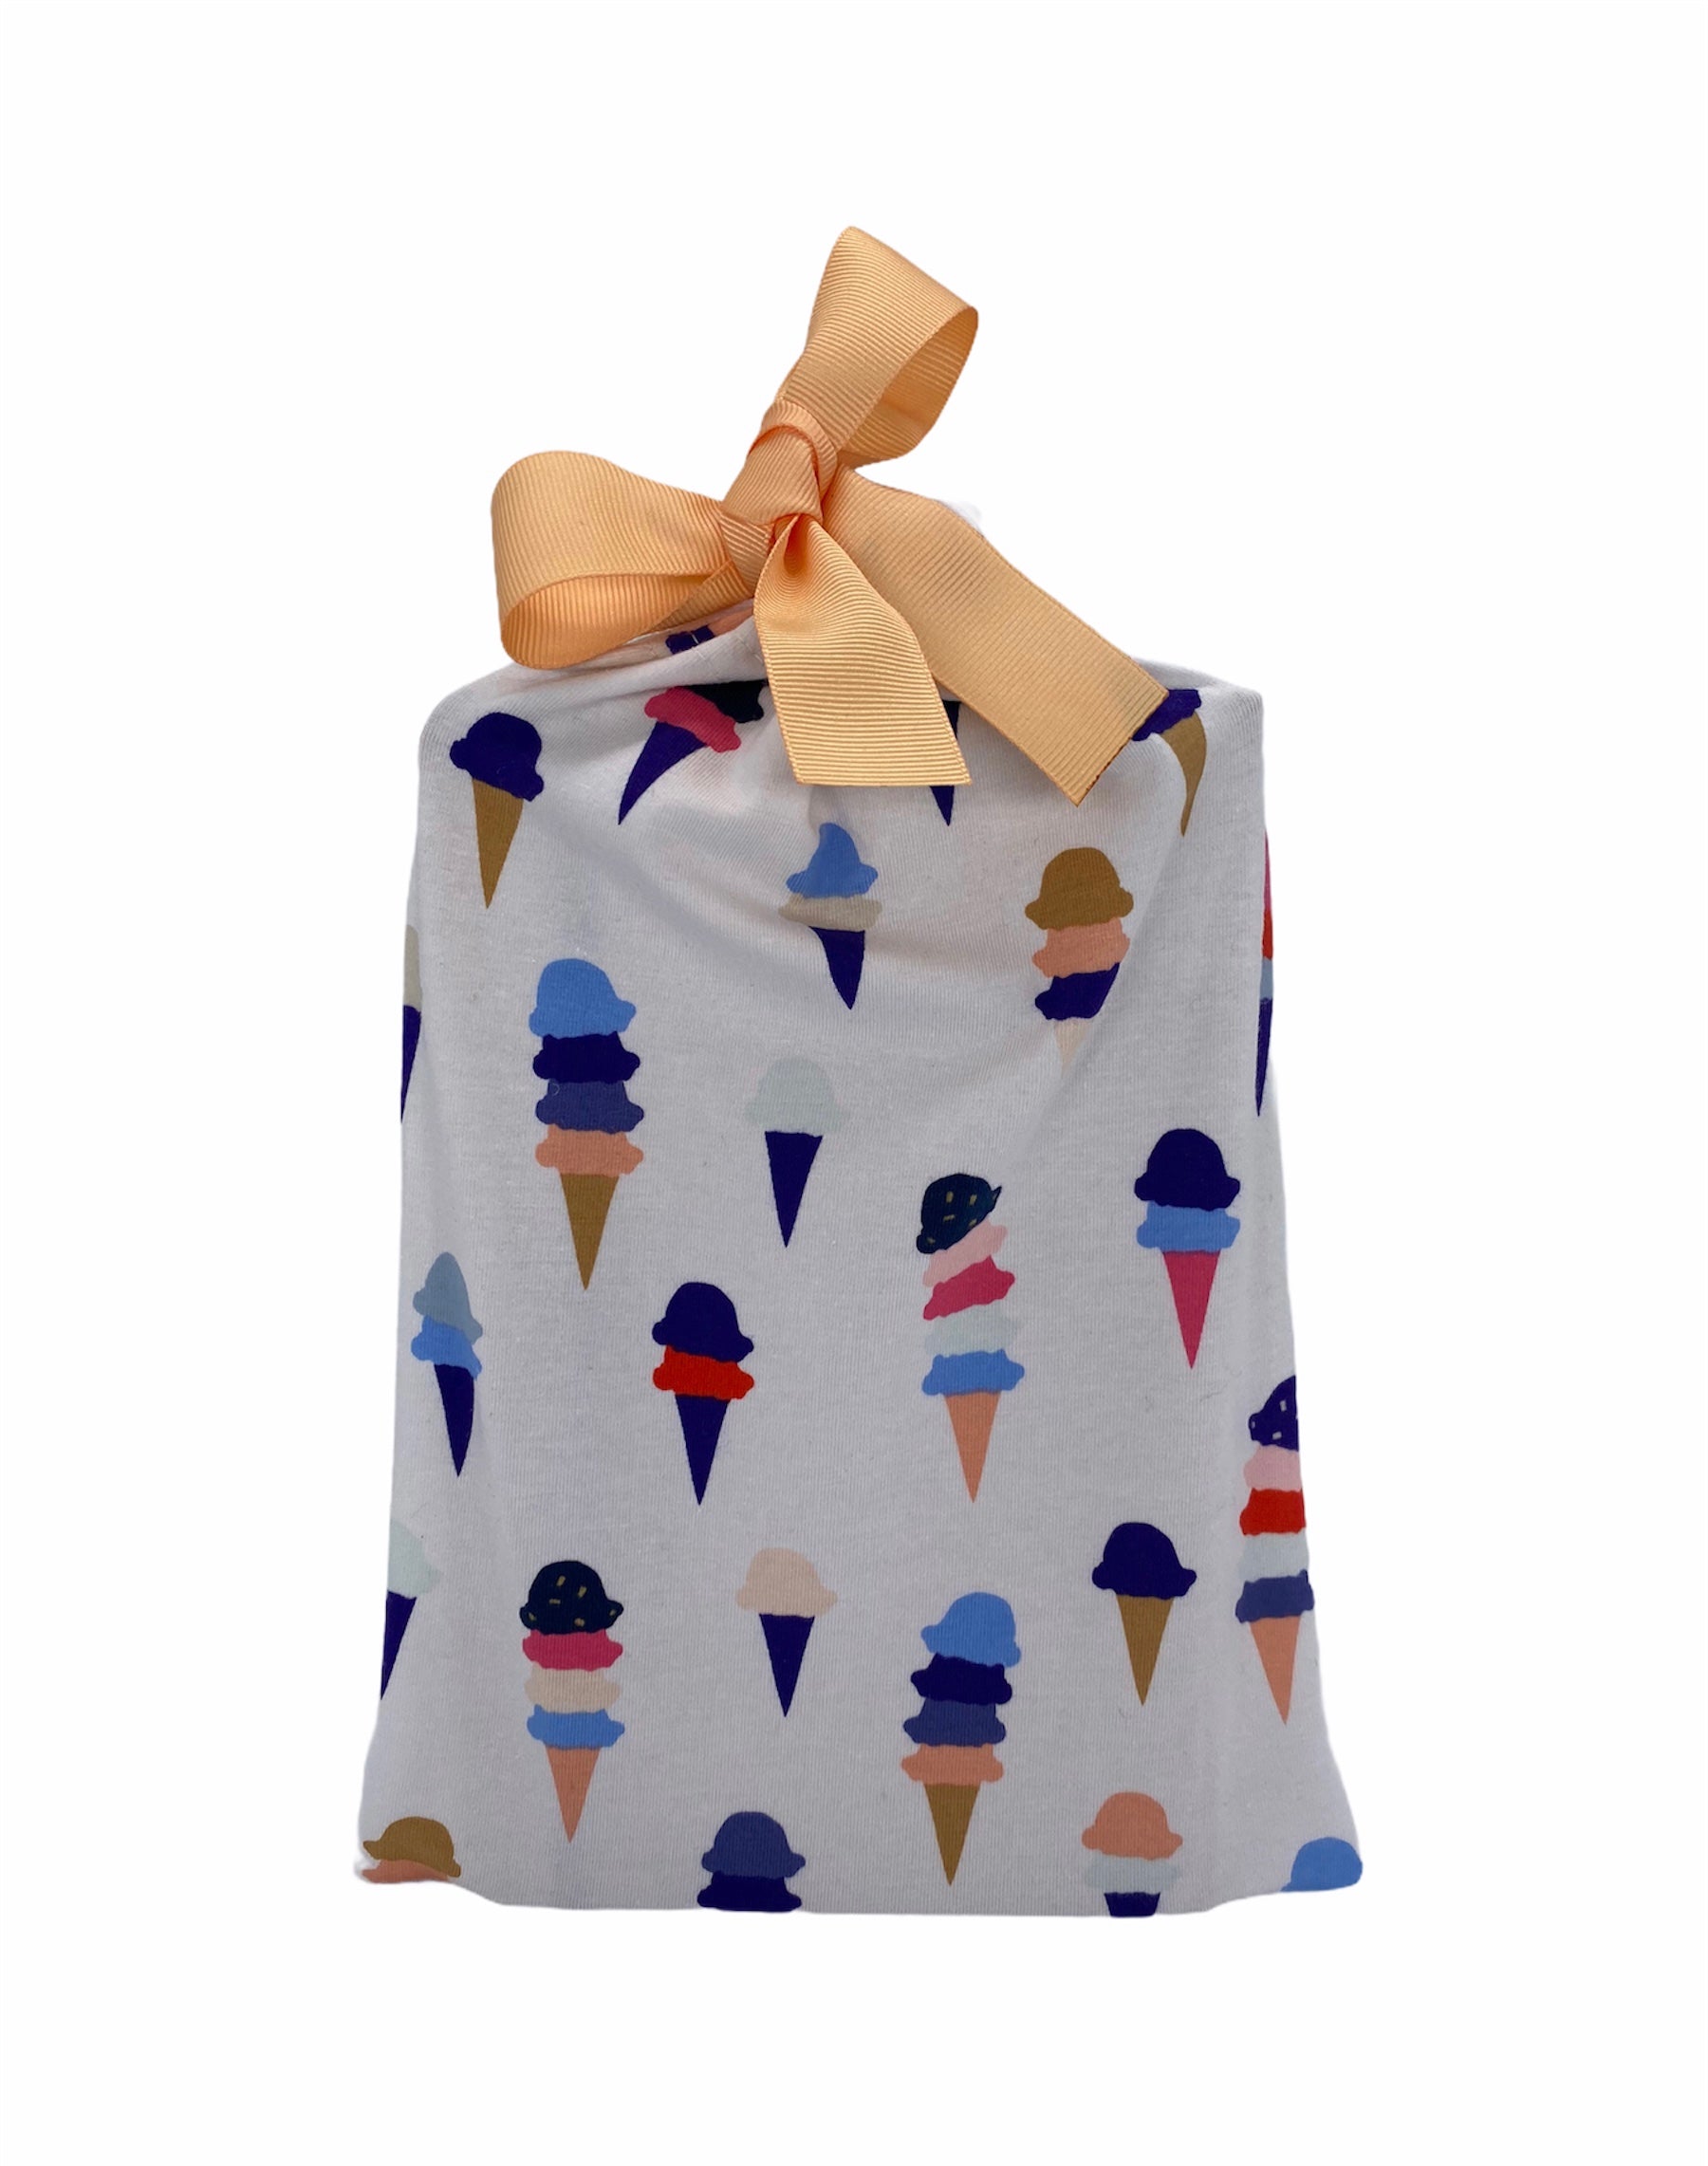 Small Ice-Cream gift bag